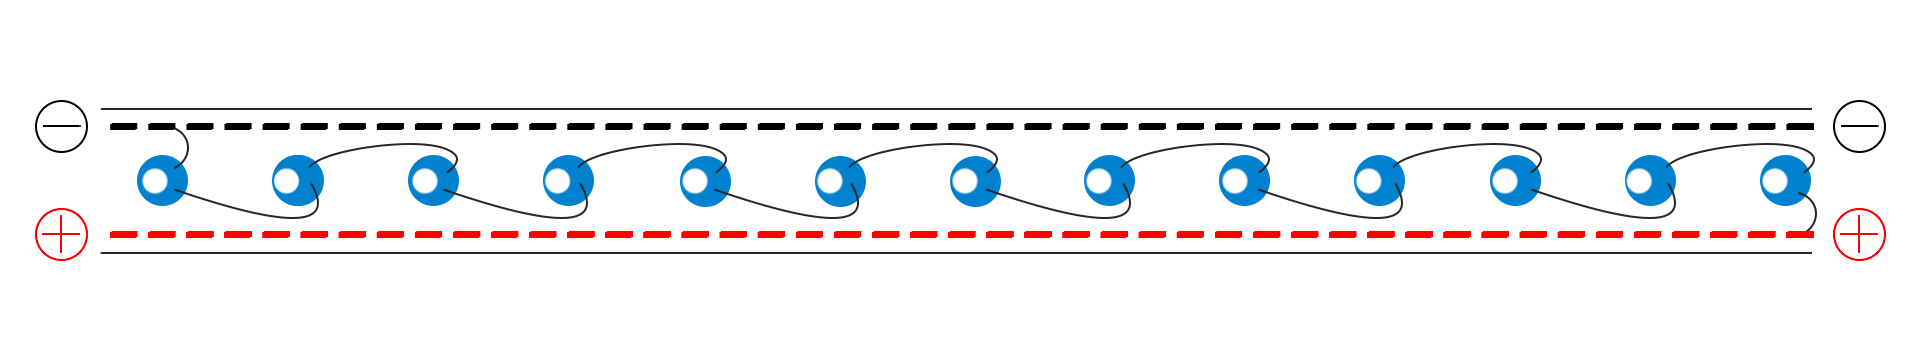 Endura Rope Light Polarity Diagram Straight